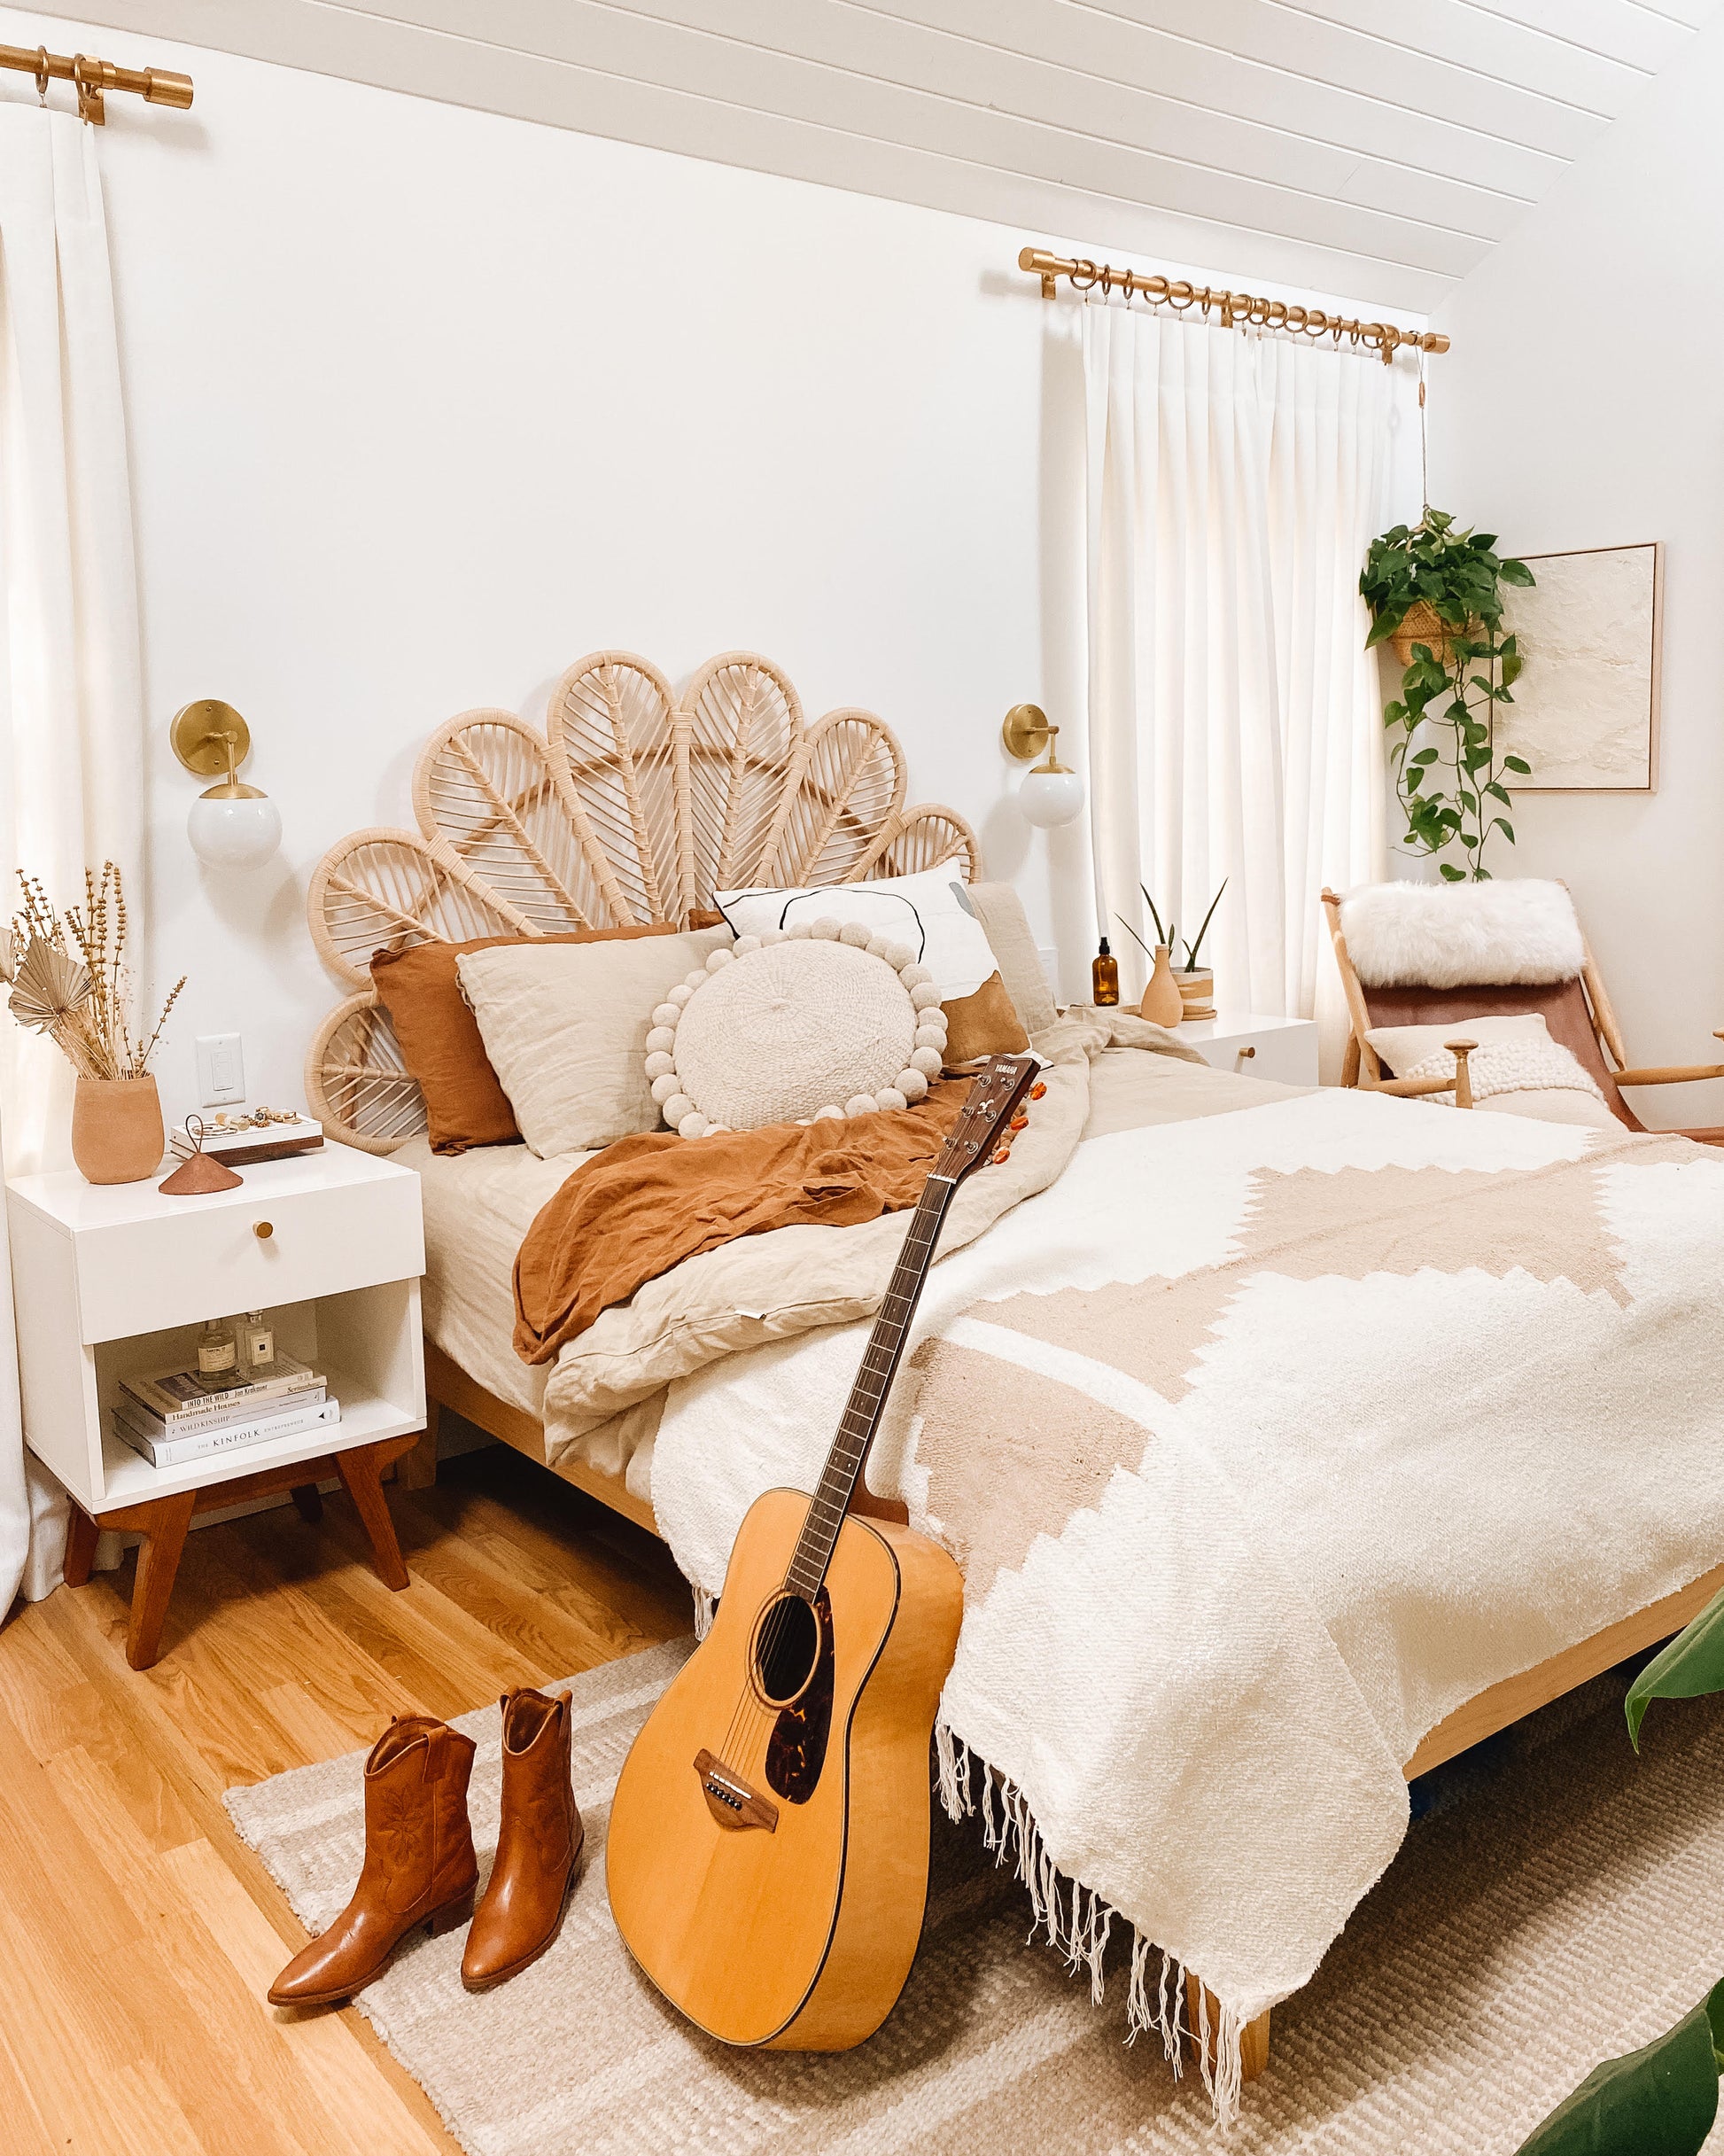 Tribe & True Handwoven Blanket - Adobe Ivory X-Large bedroom